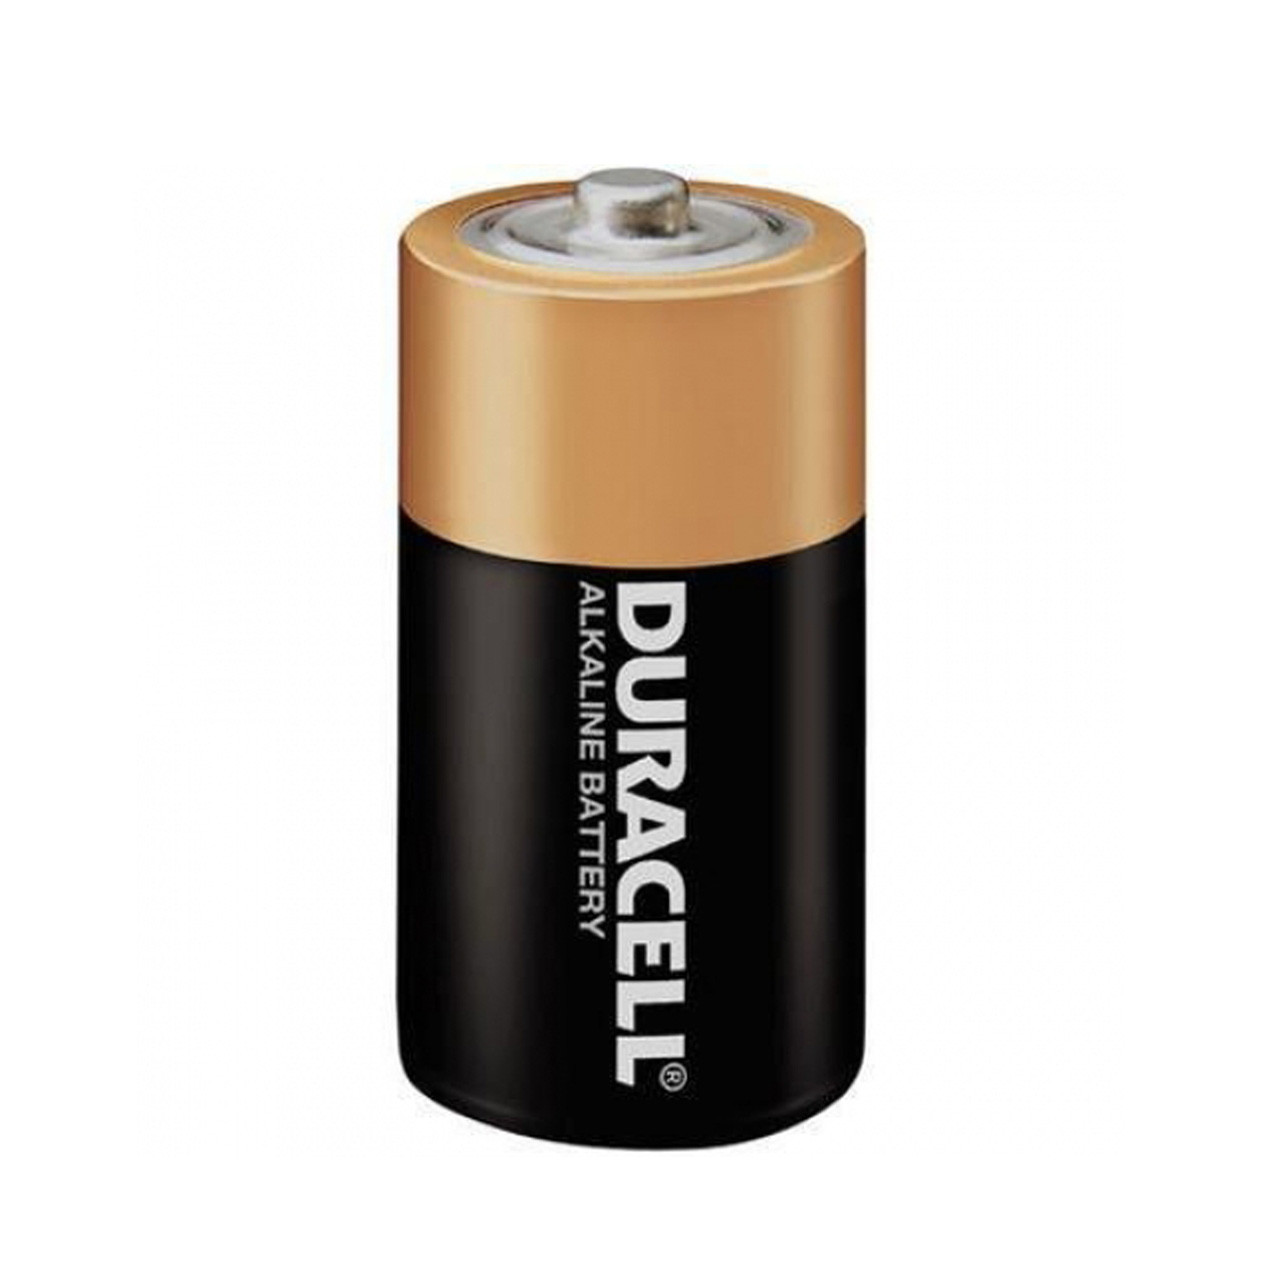 Duracell C Battery - 10 Life - EmergencyKits.com